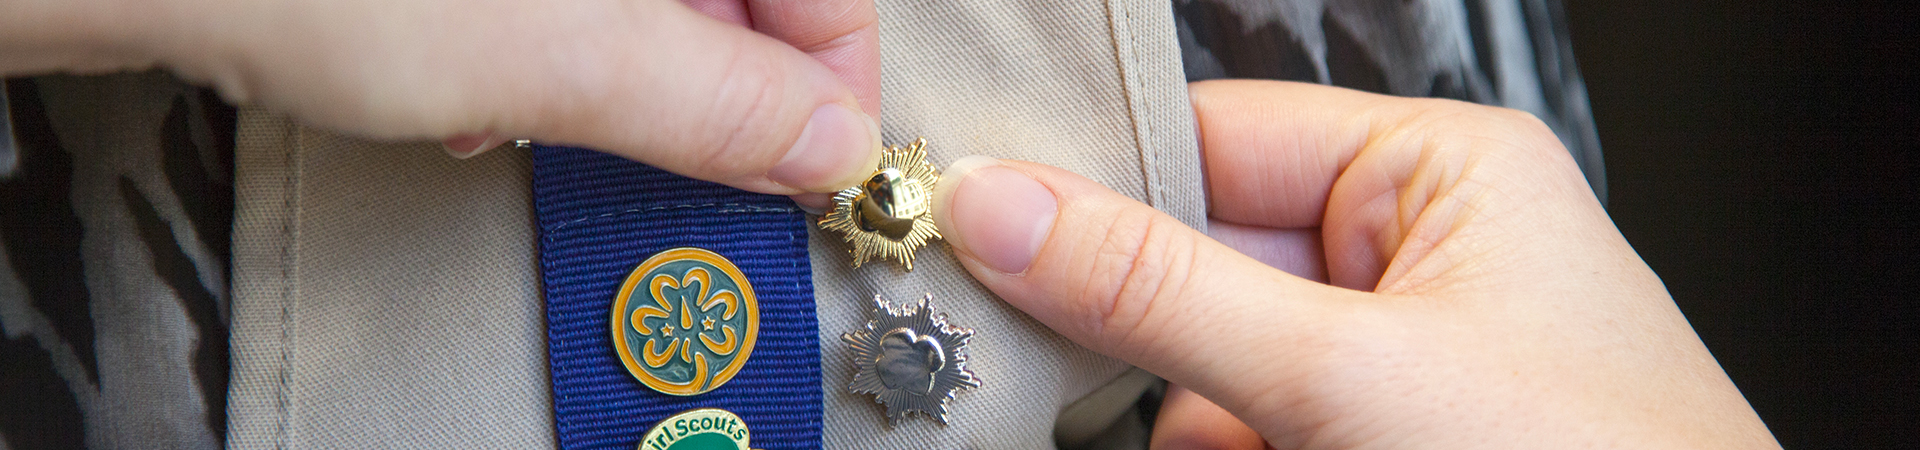  Gold Award pin on uniform 